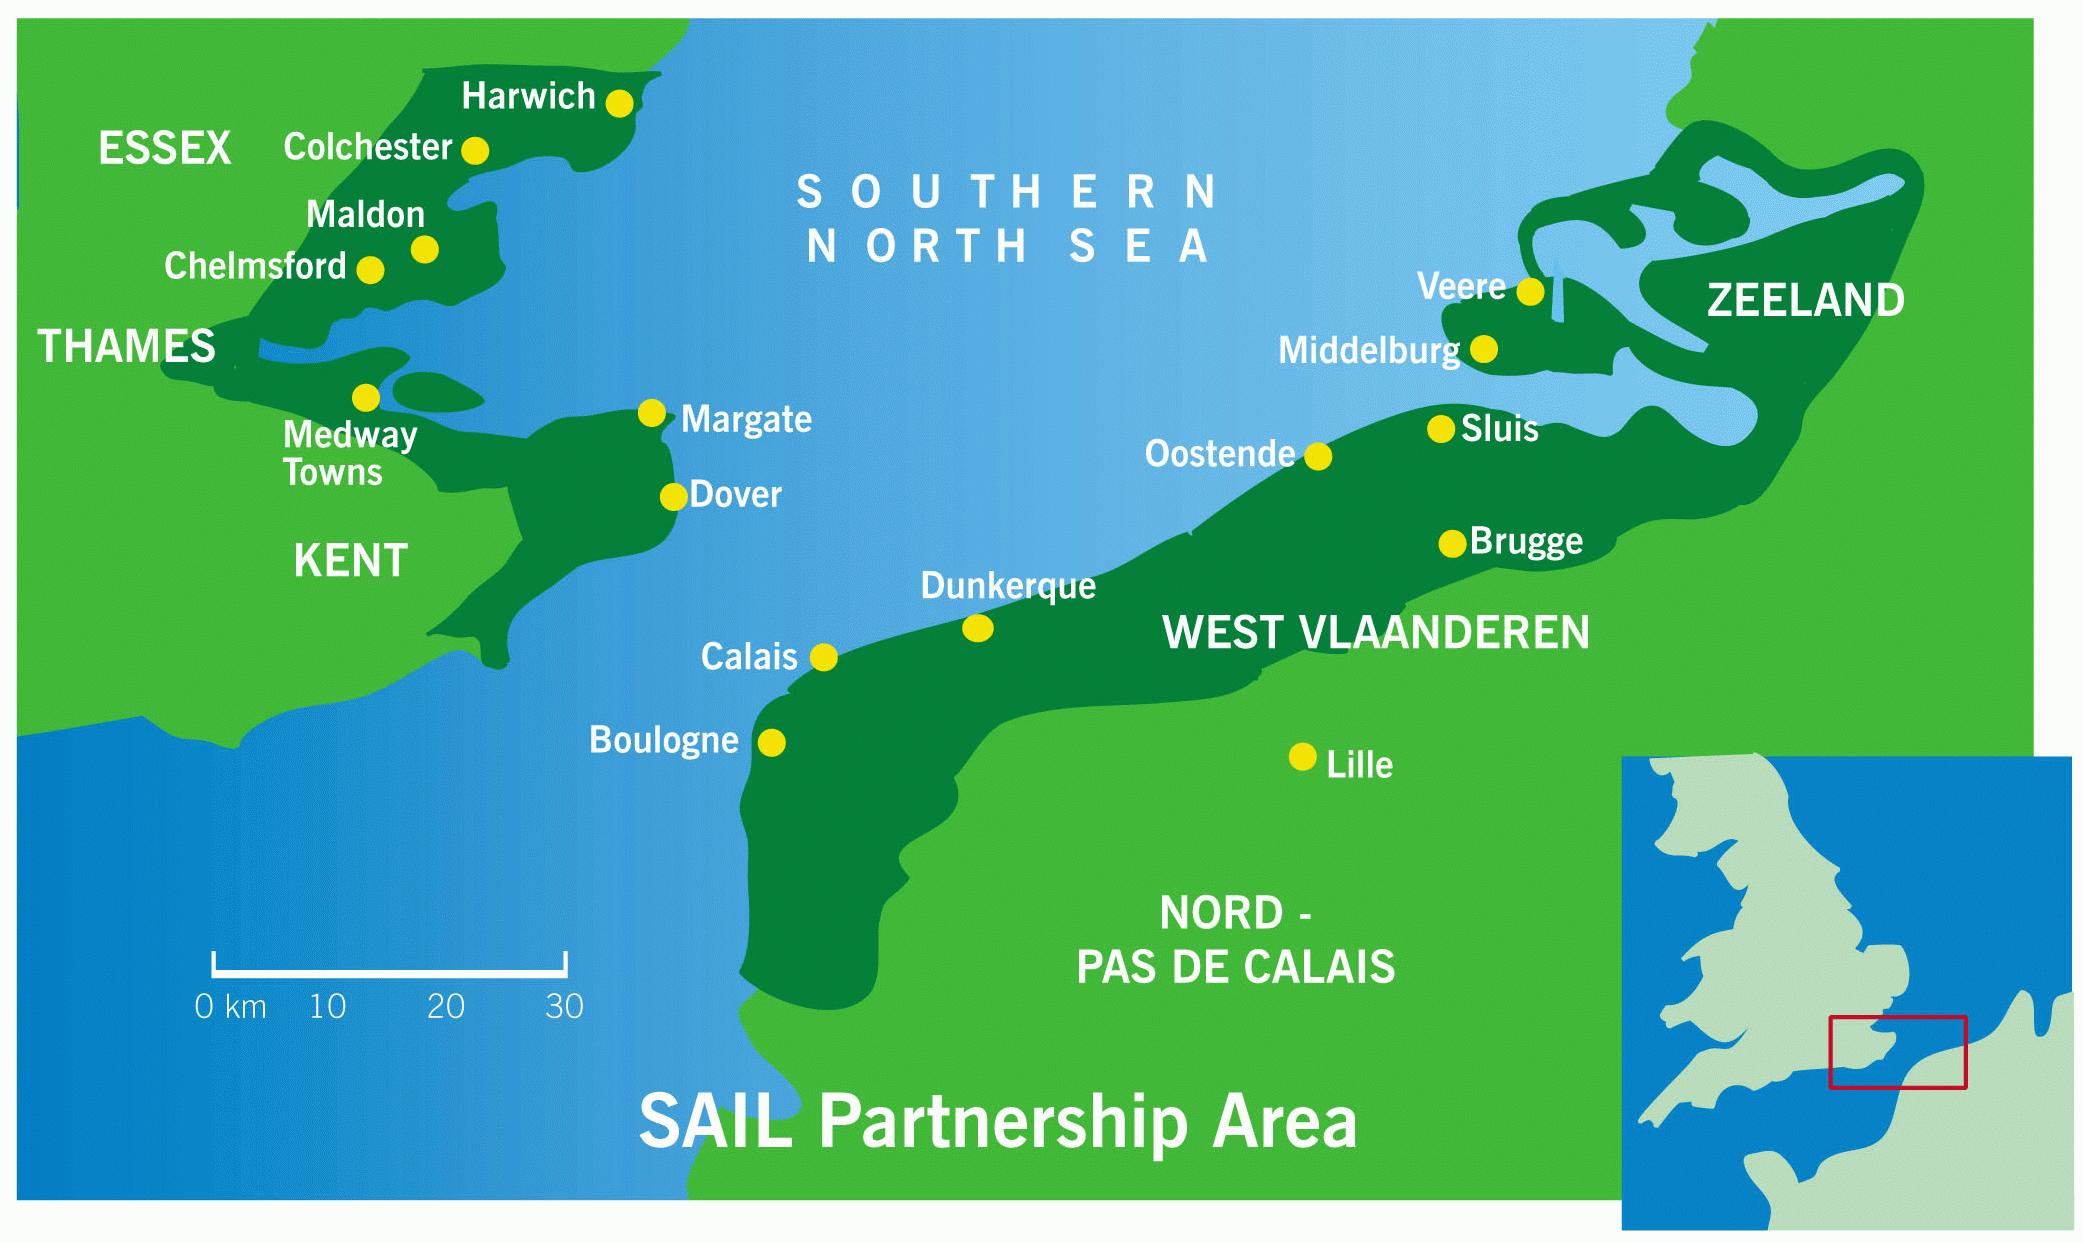 The SAIL region